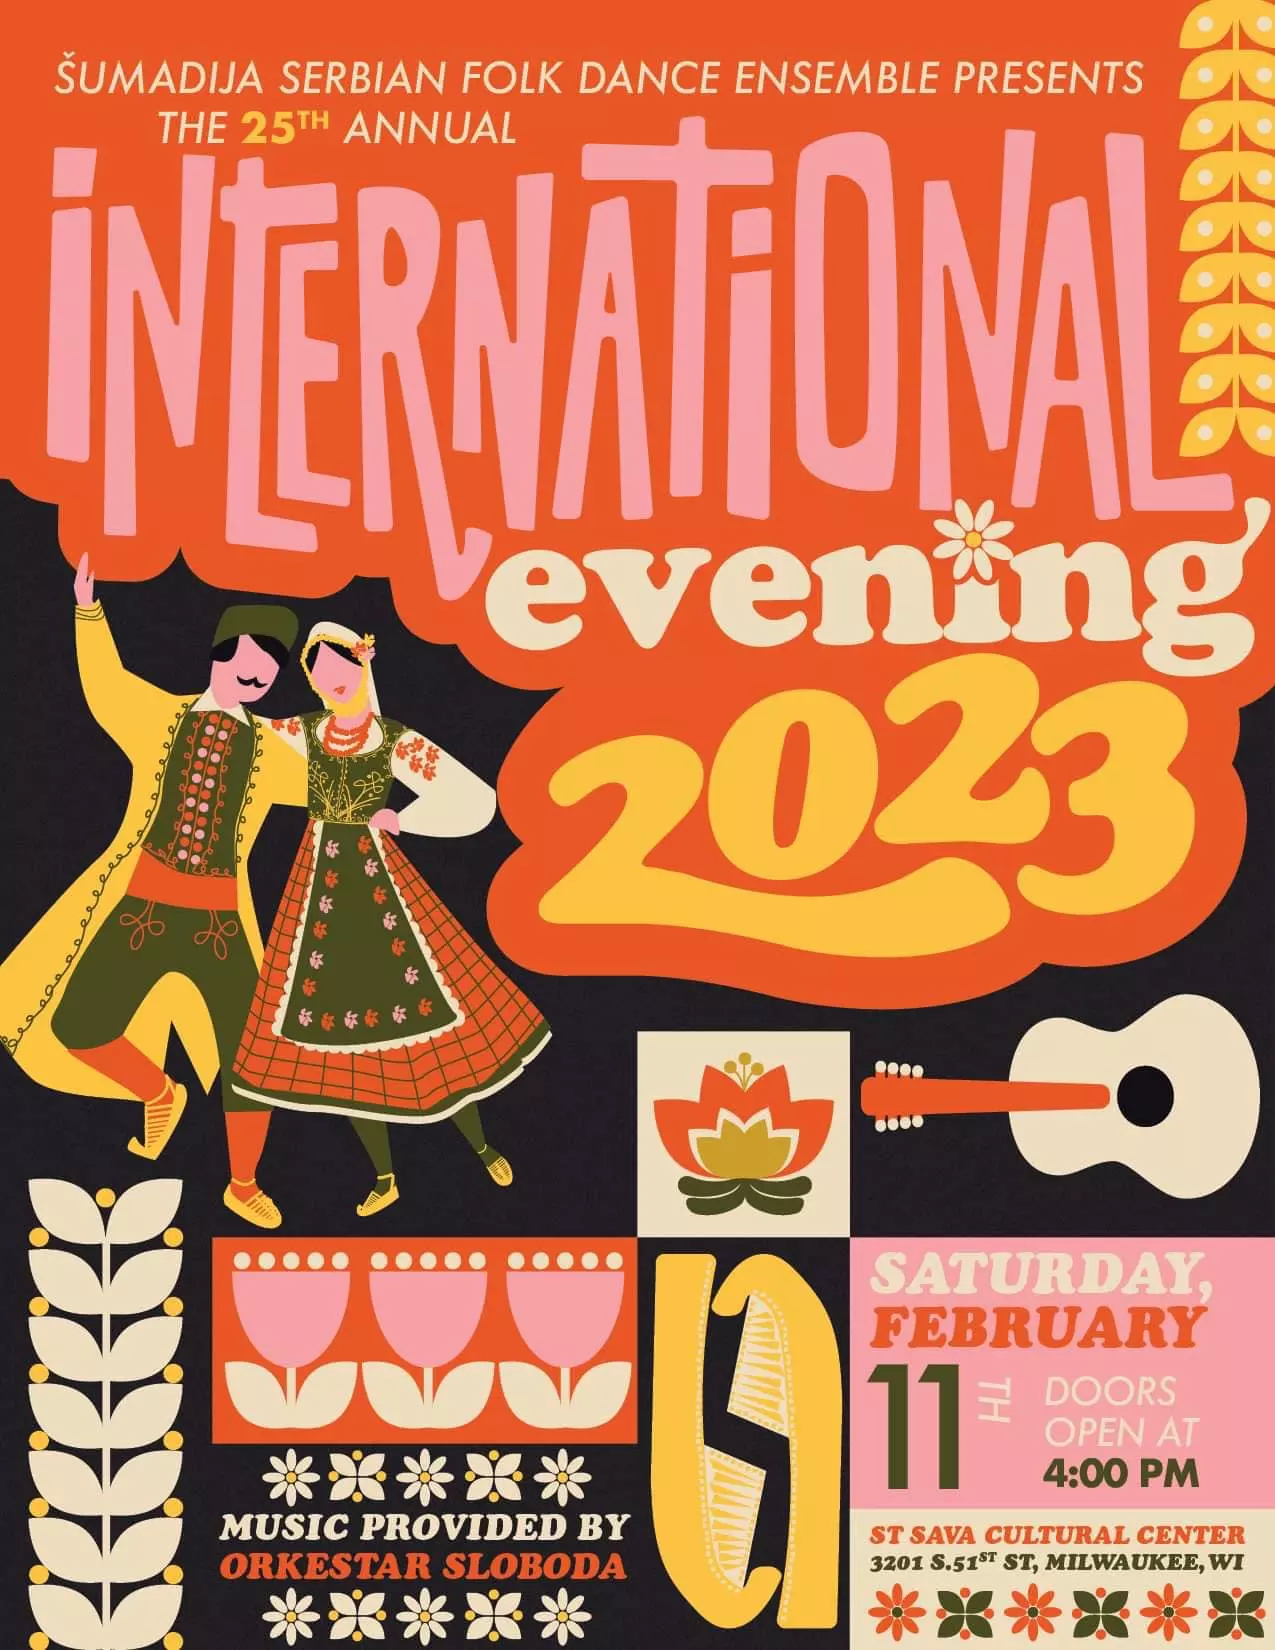 International Evening 2023 – The Folk Dance Celebration’s 25th Year